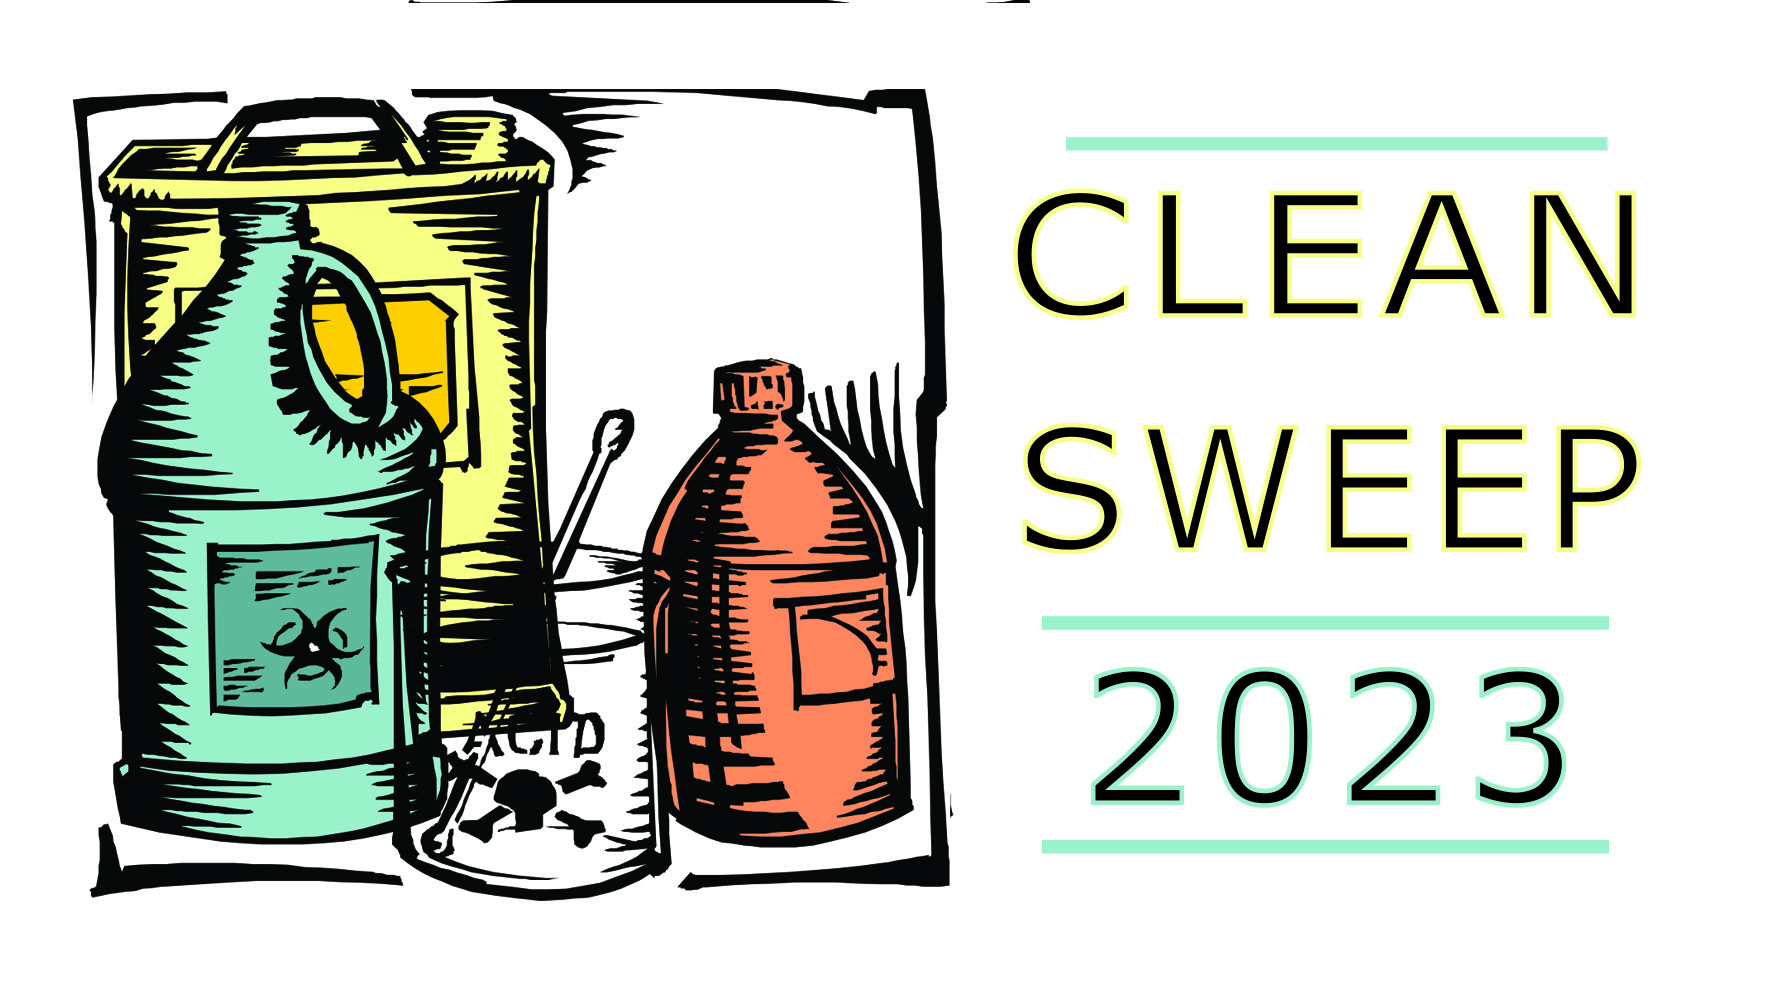 cleansweepwebsite2023